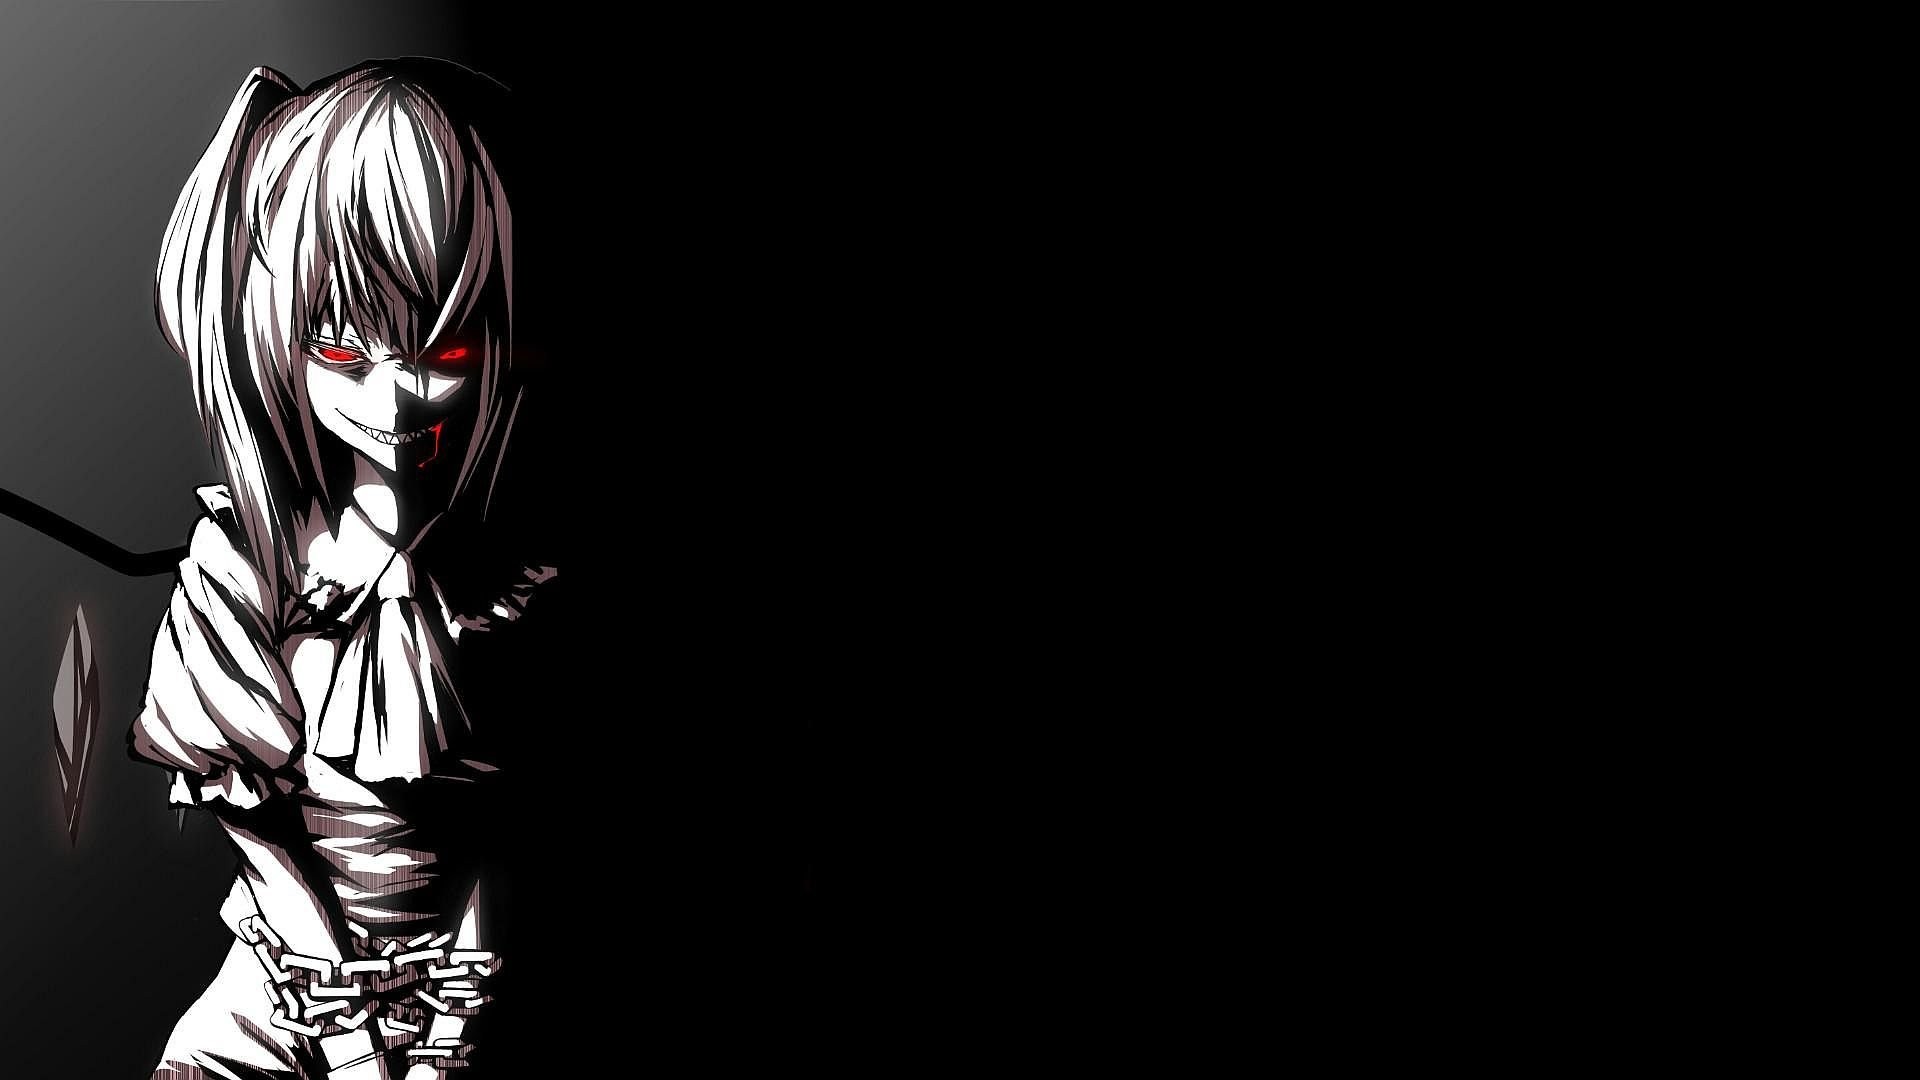 Anime 1920x1080 dark anime Touhou Flandre Scarlet anime girls red eyes creepy simple background black background